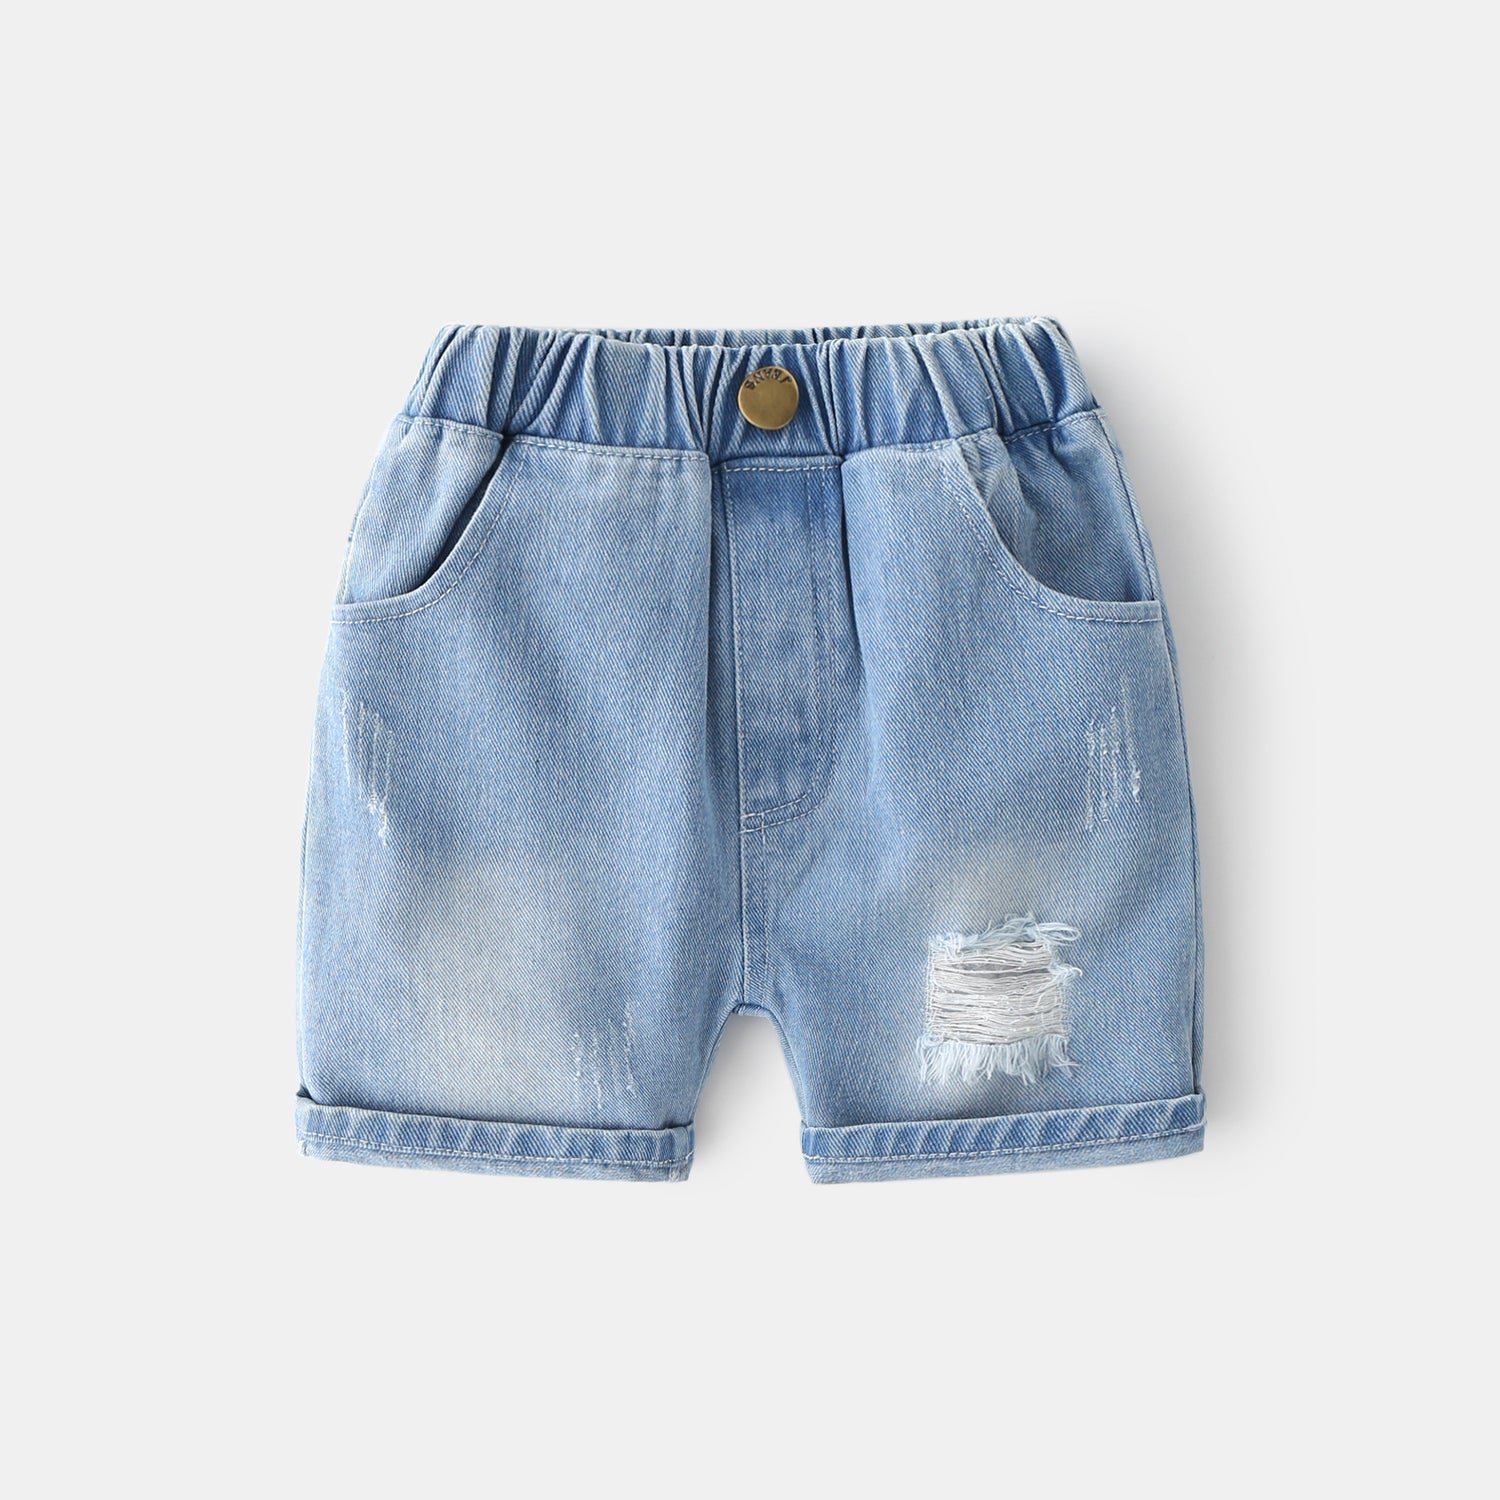 [5131044] - Bawahan Celana Pendek Jeans Sobek Fashion Import Anak Laki-Laki - Motif Tear Gradation